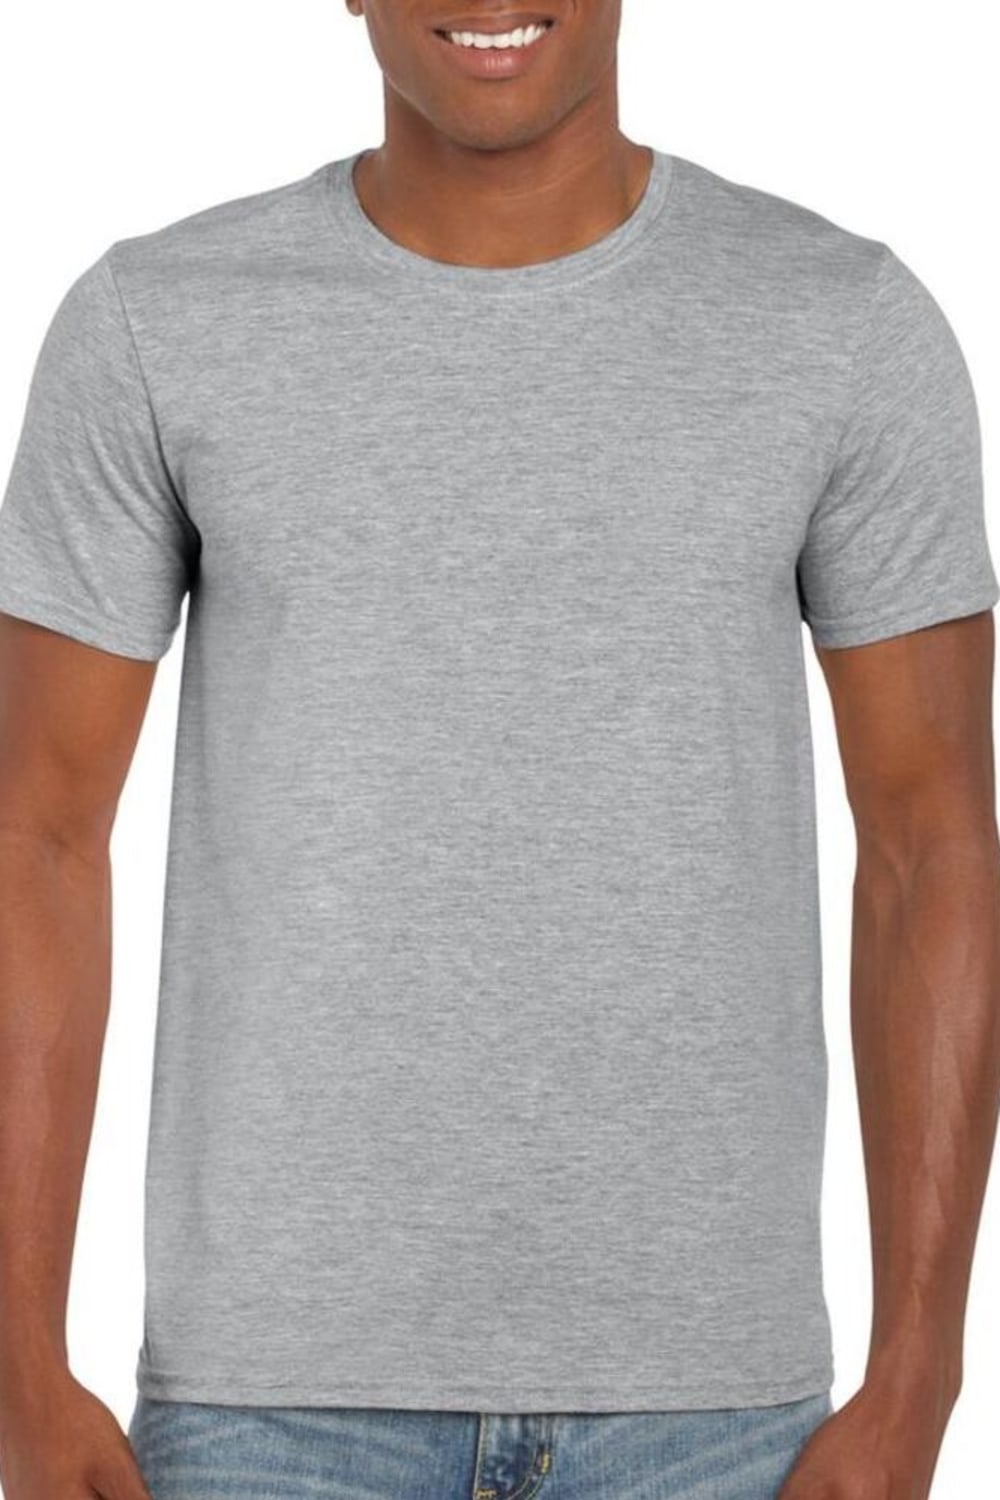 Mens Soft Style Ringspun T Shirt - Sport Gray